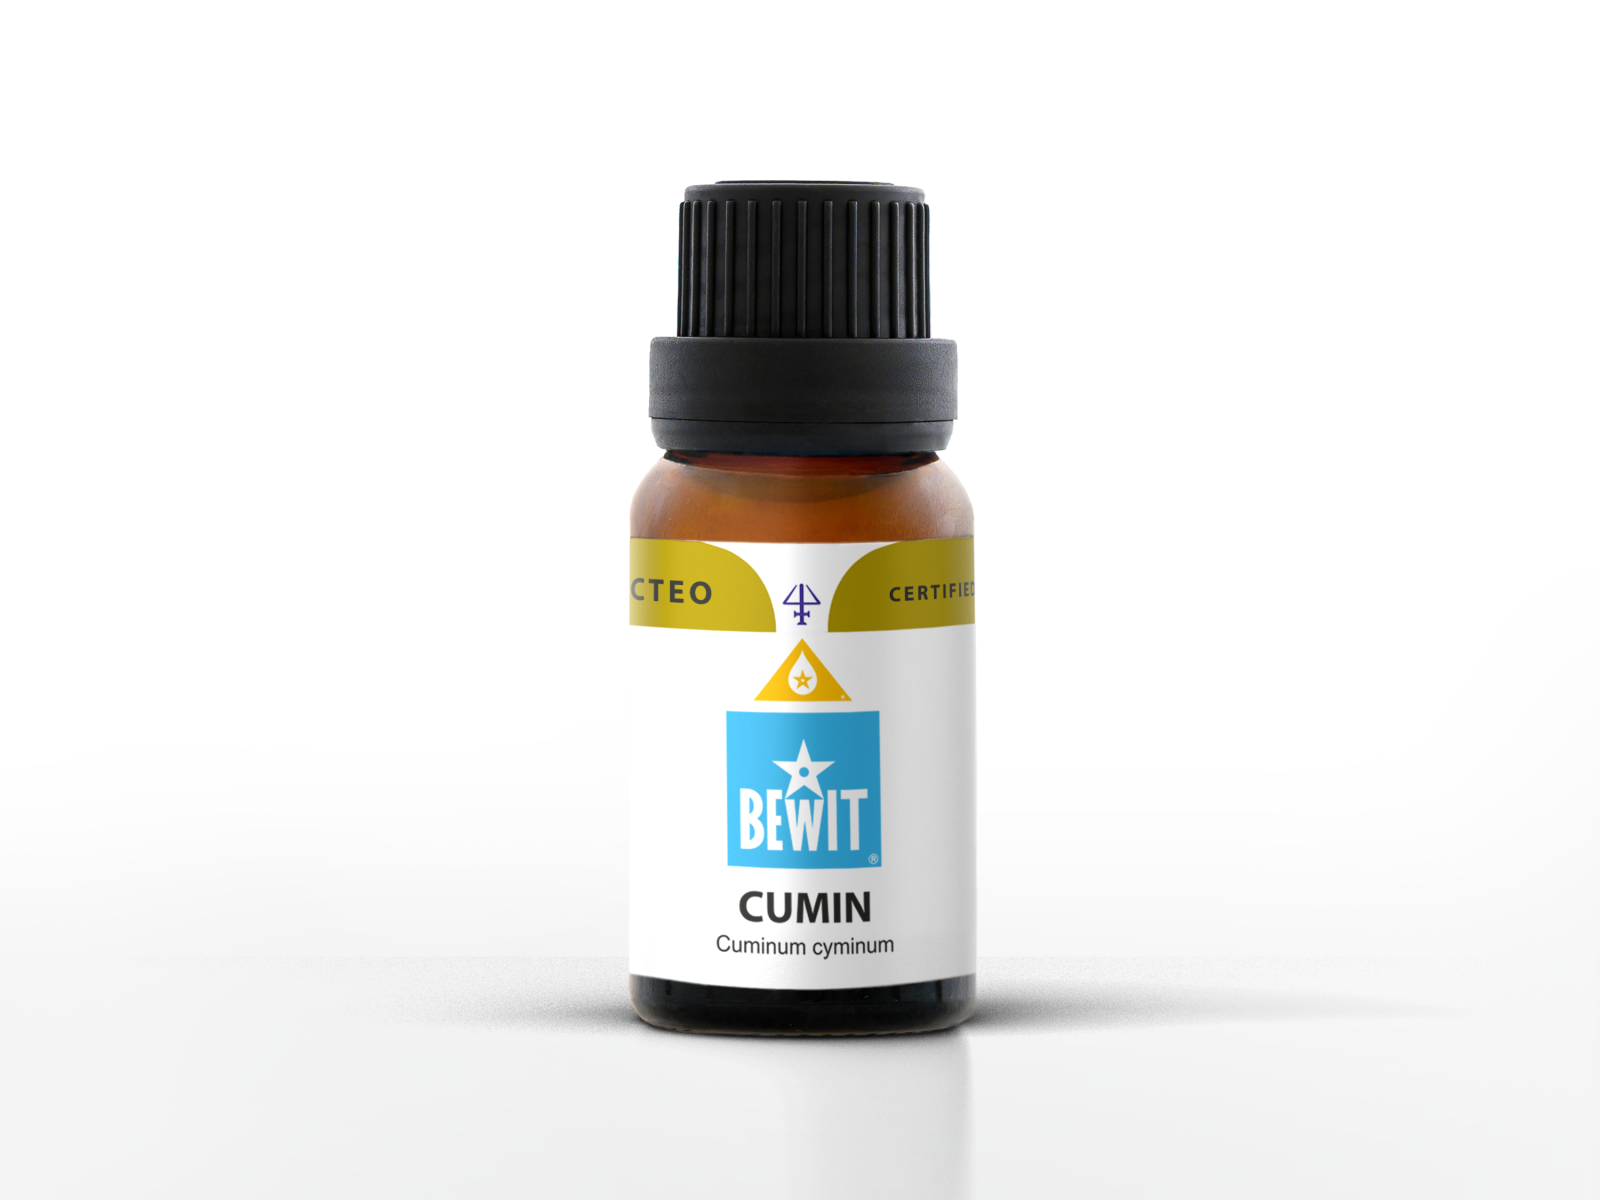 Cumin: The Worldwide Spice Sensation